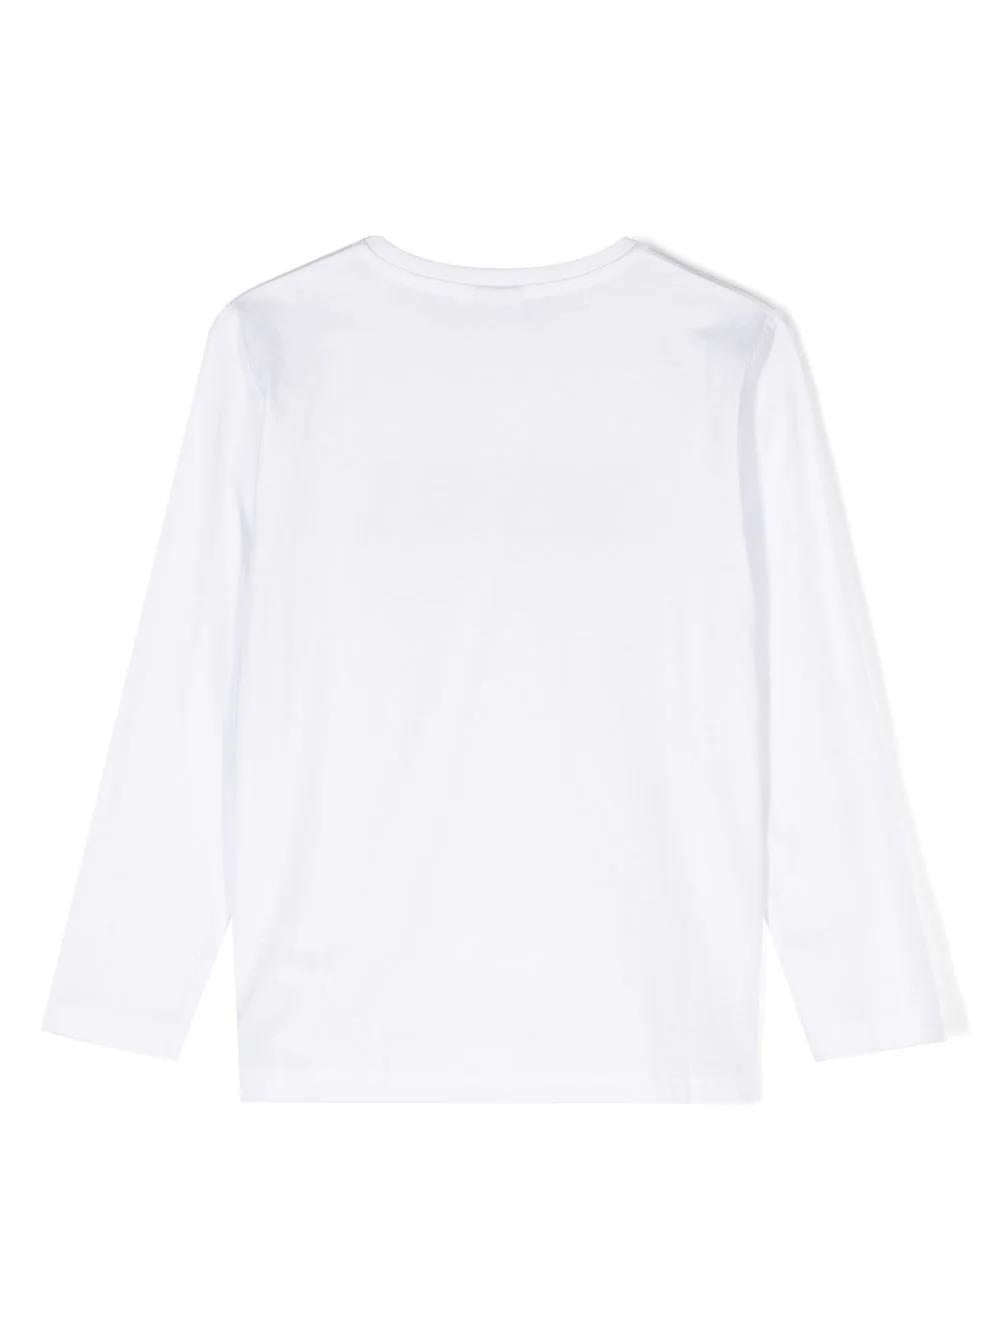 White cotton jersey boy HUGO BOSS t-shirt